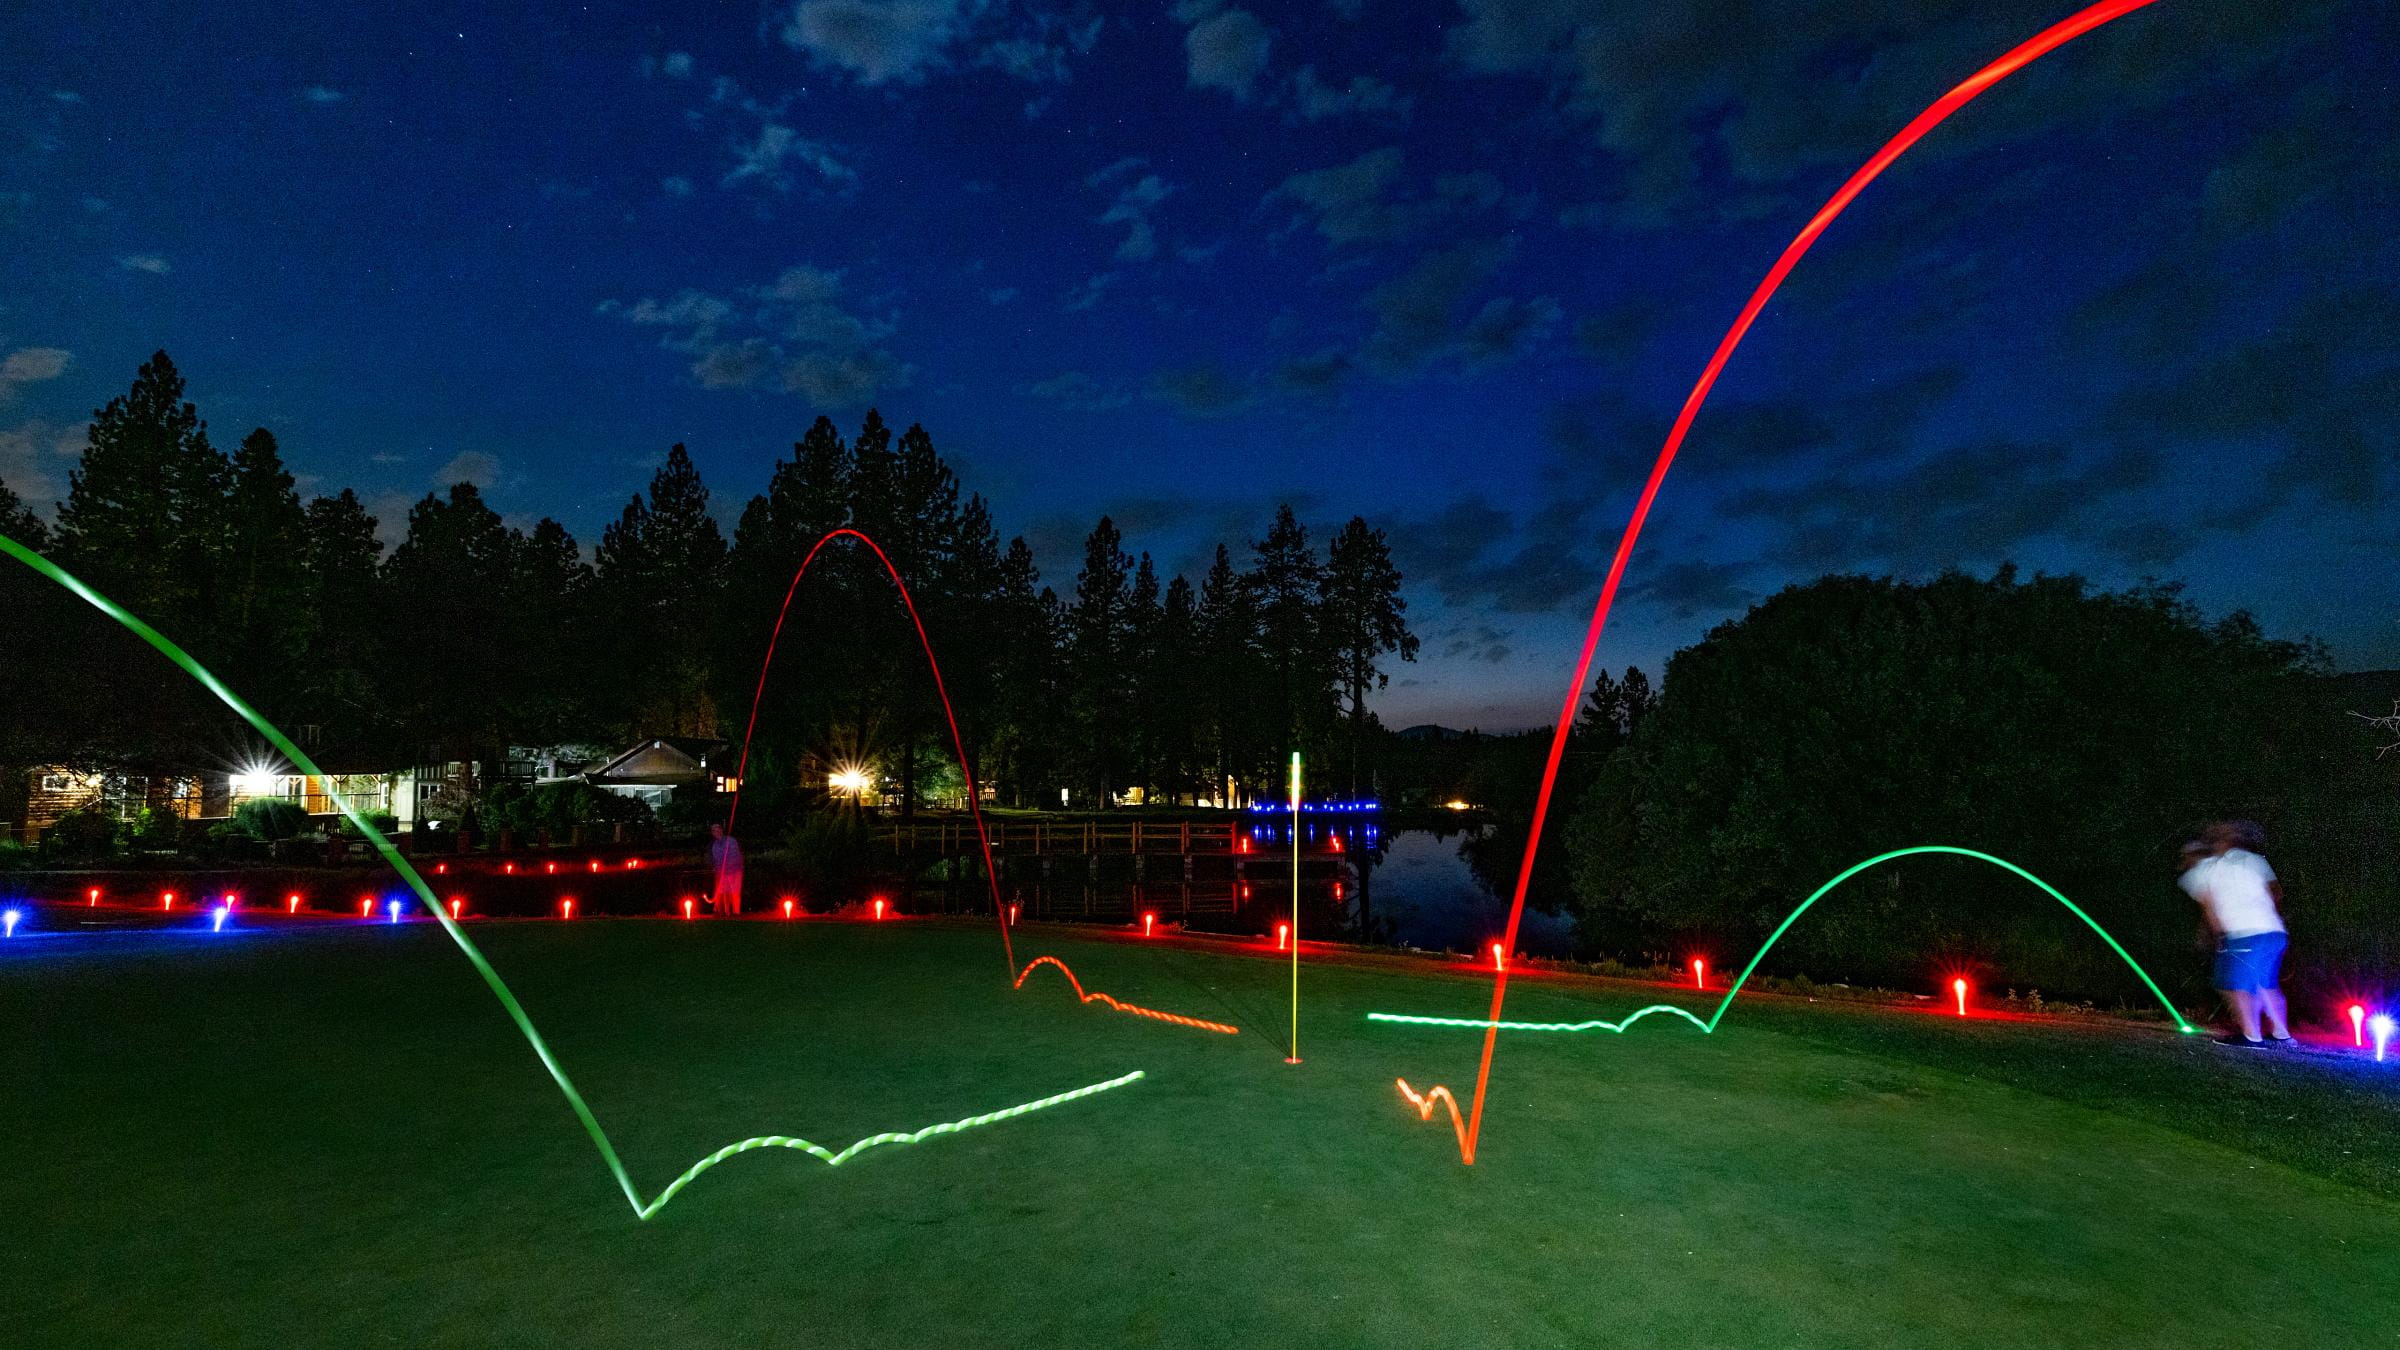 Glow golf ball and club